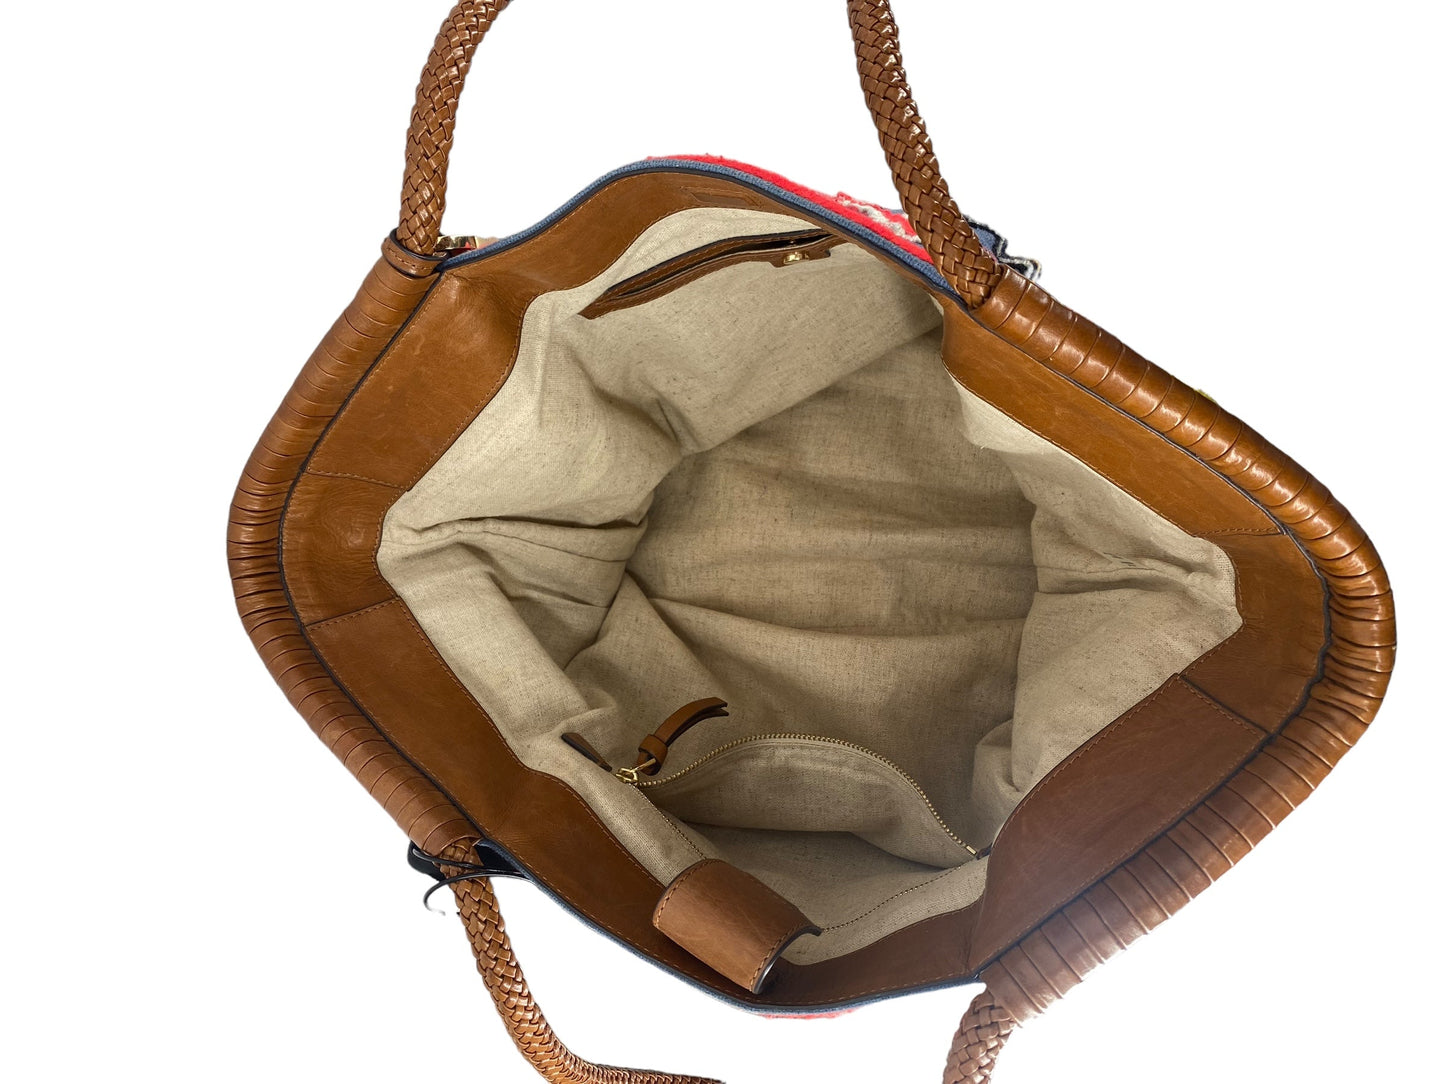 Handbag Tory Burch, Size Large